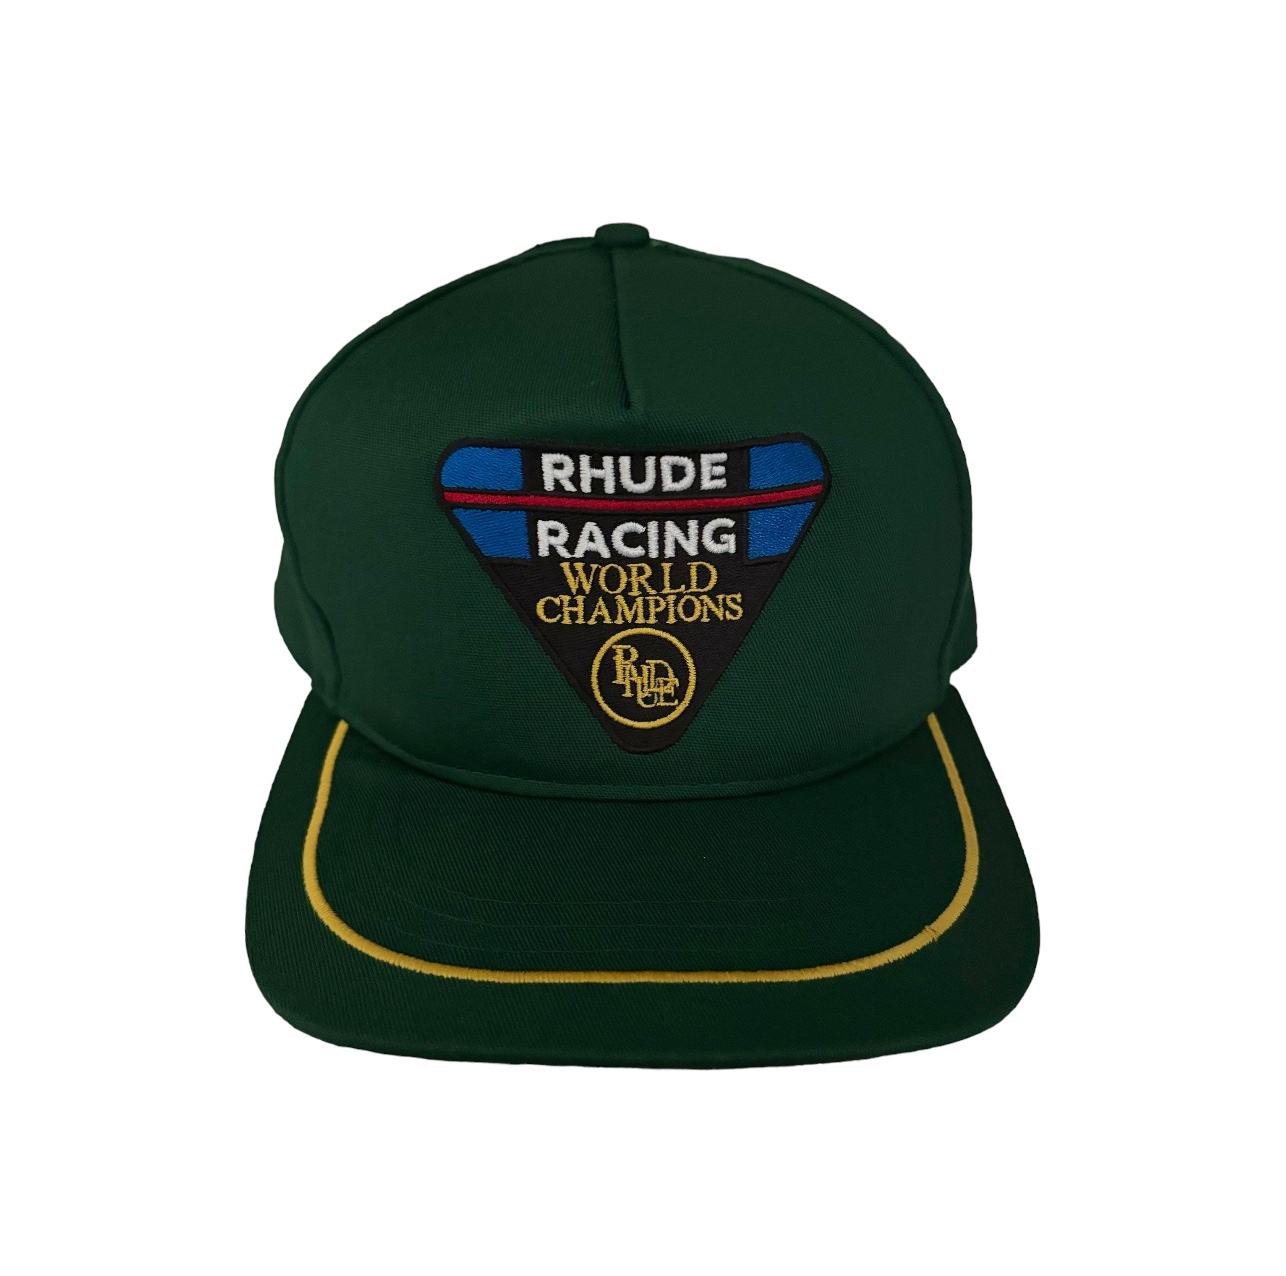 Rhude Racing Championship F1 Snapback hat